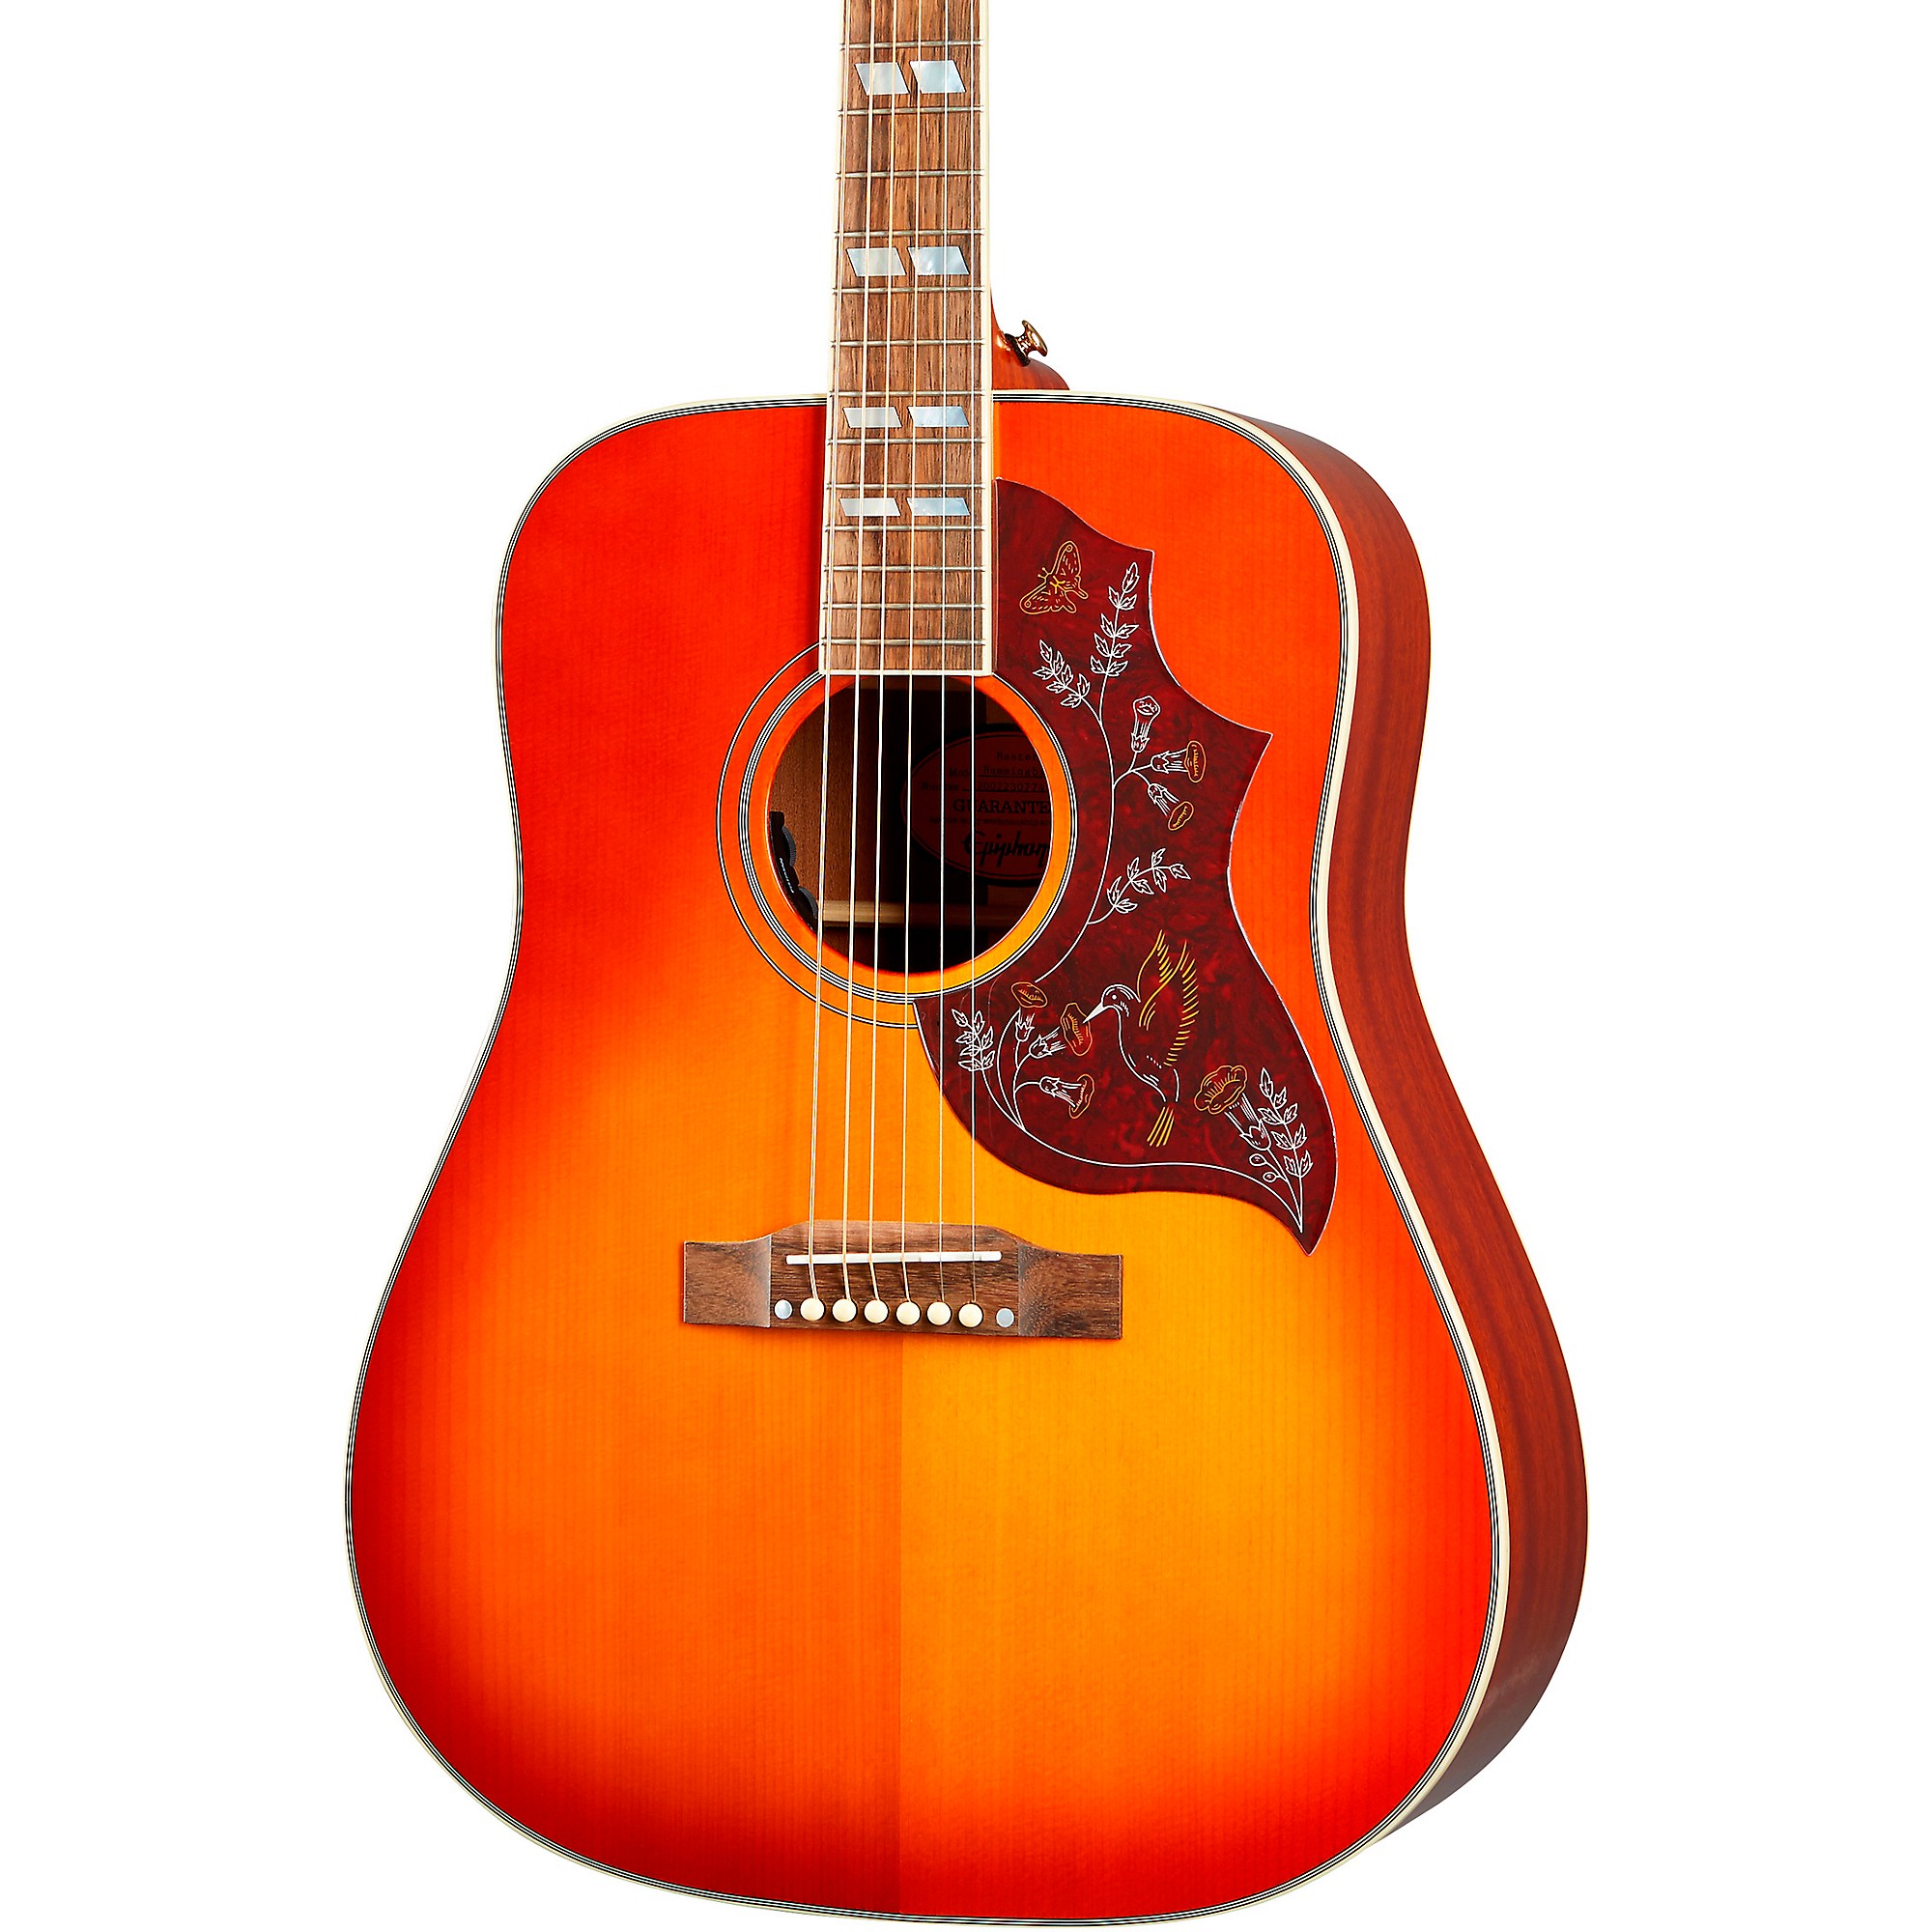 Epiphone, вдохновленный акусто-электрической гитарой Gibson Hummingbird Aged Cherry Sunburst epiphone hummingbird aged cherry sunburst электроакустическая гитара цвет санбёрст